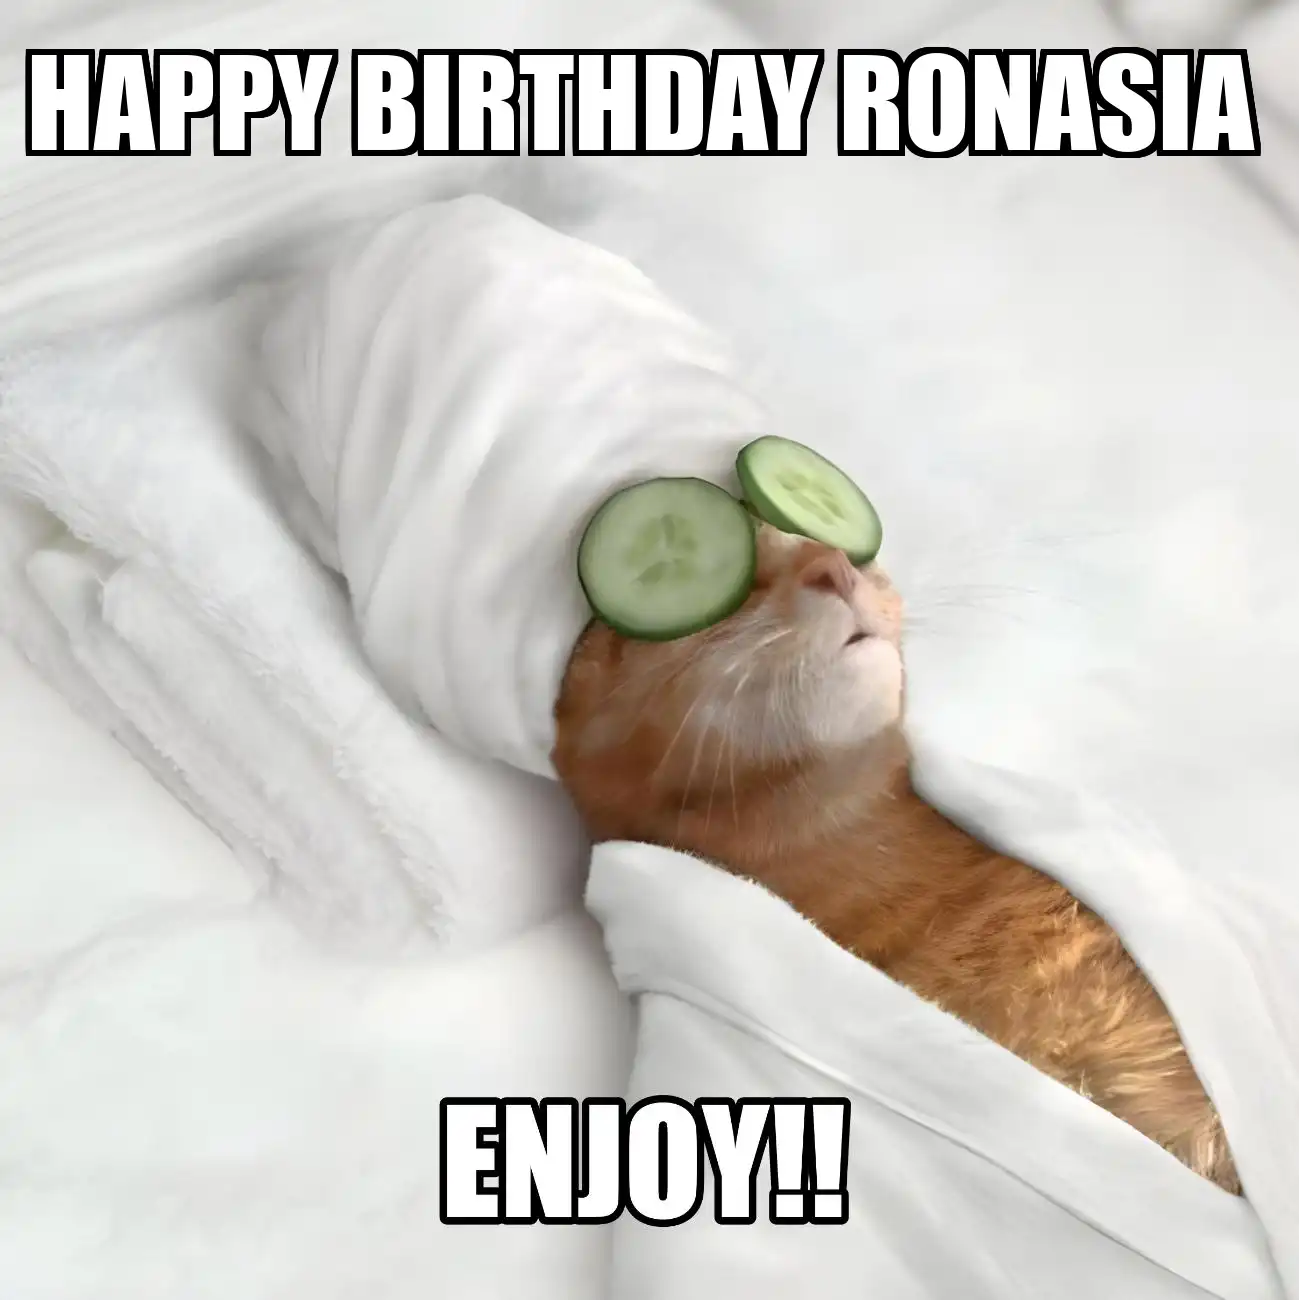 Happy Birthday Ronasia Enjoy Cat Meme